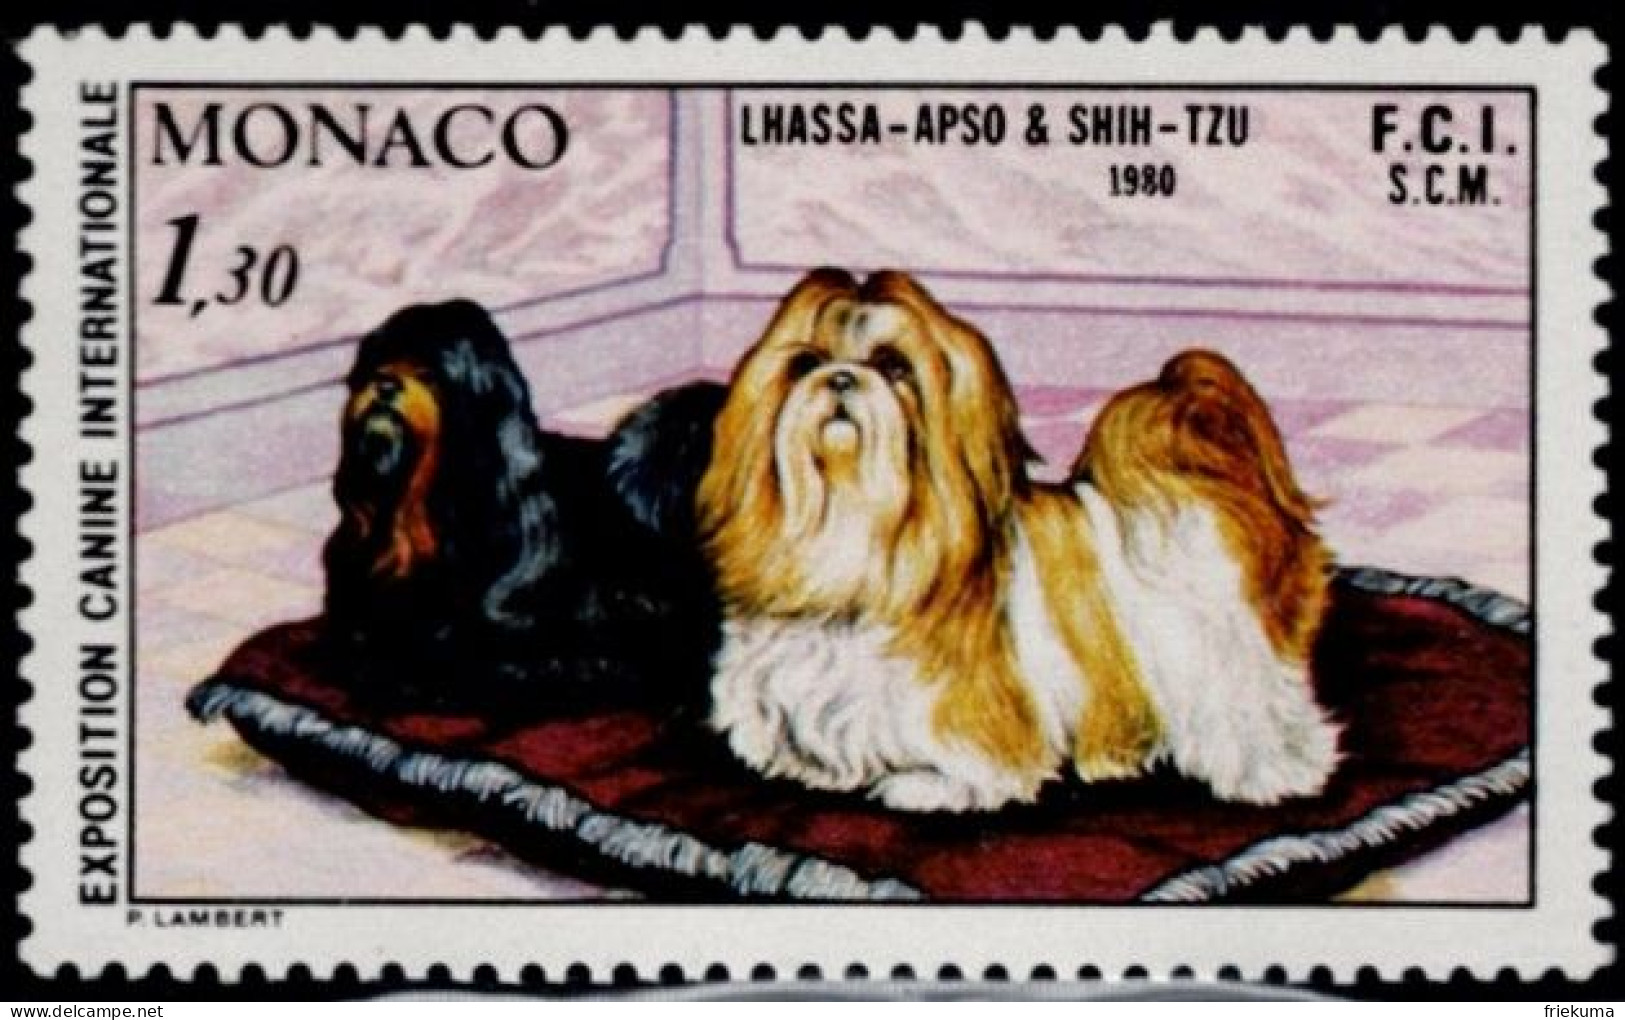 Monaco 1980, Exposition Canine Internationale/International Dog Show, Monte Carlo: Lhasa-Apso And Shih-Tzu, MiNr. 1035 - Cani